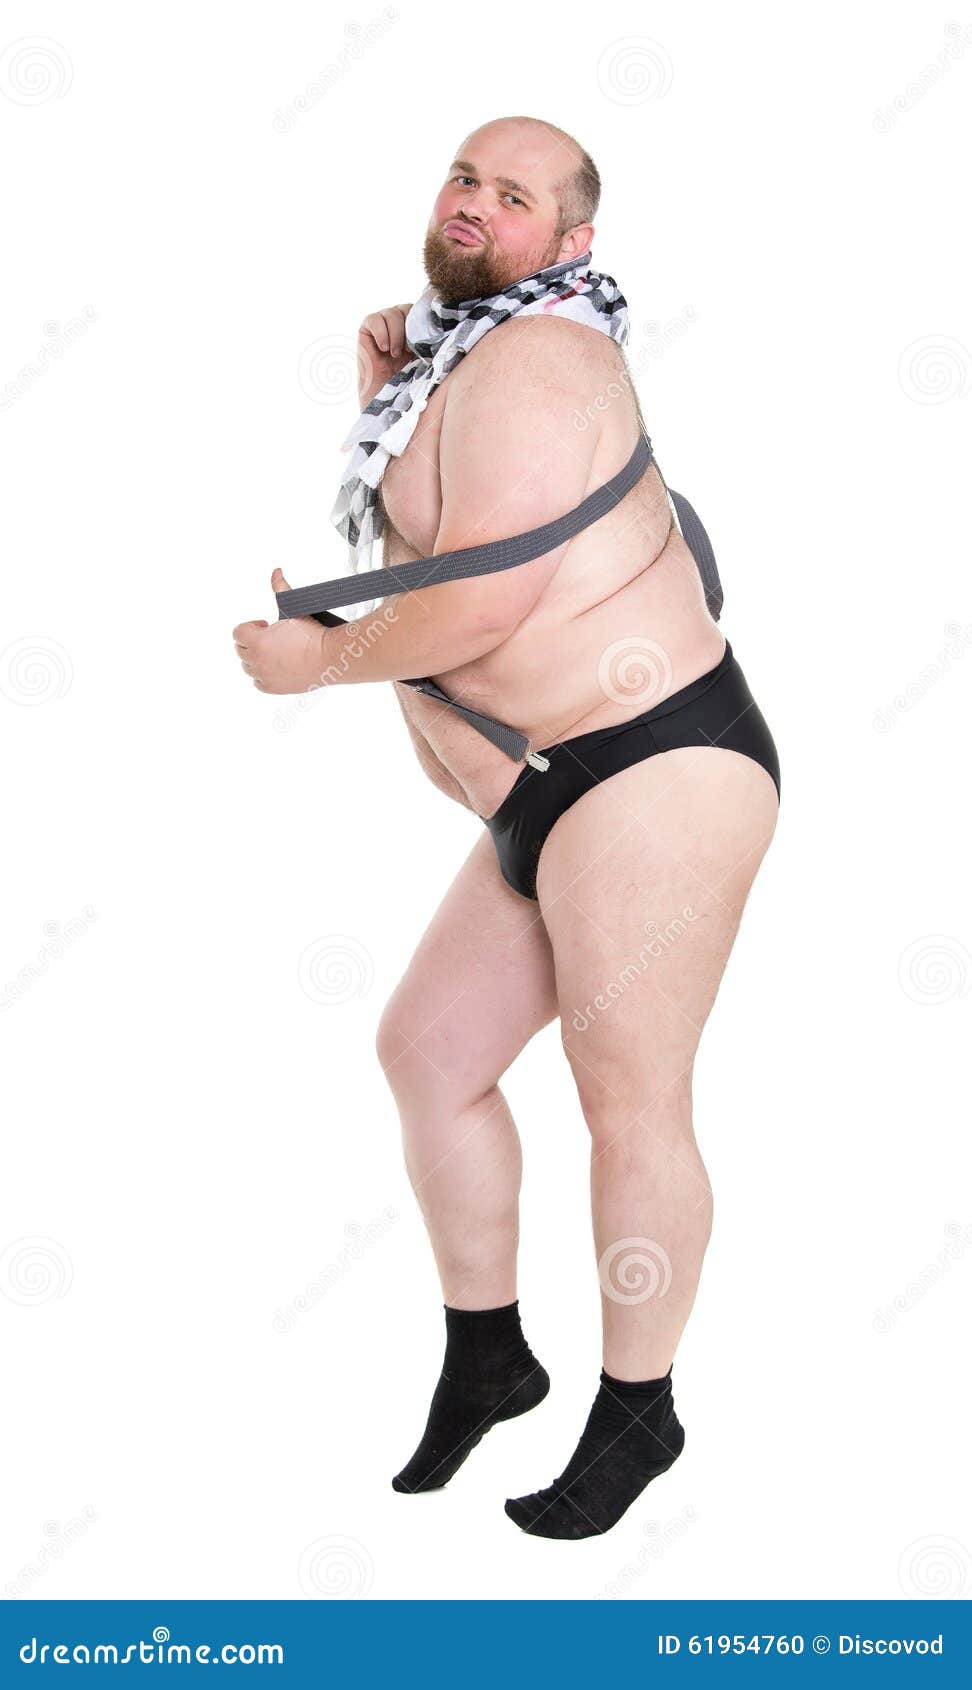 aleena fayyaz recommends Fat Guys In Underwear